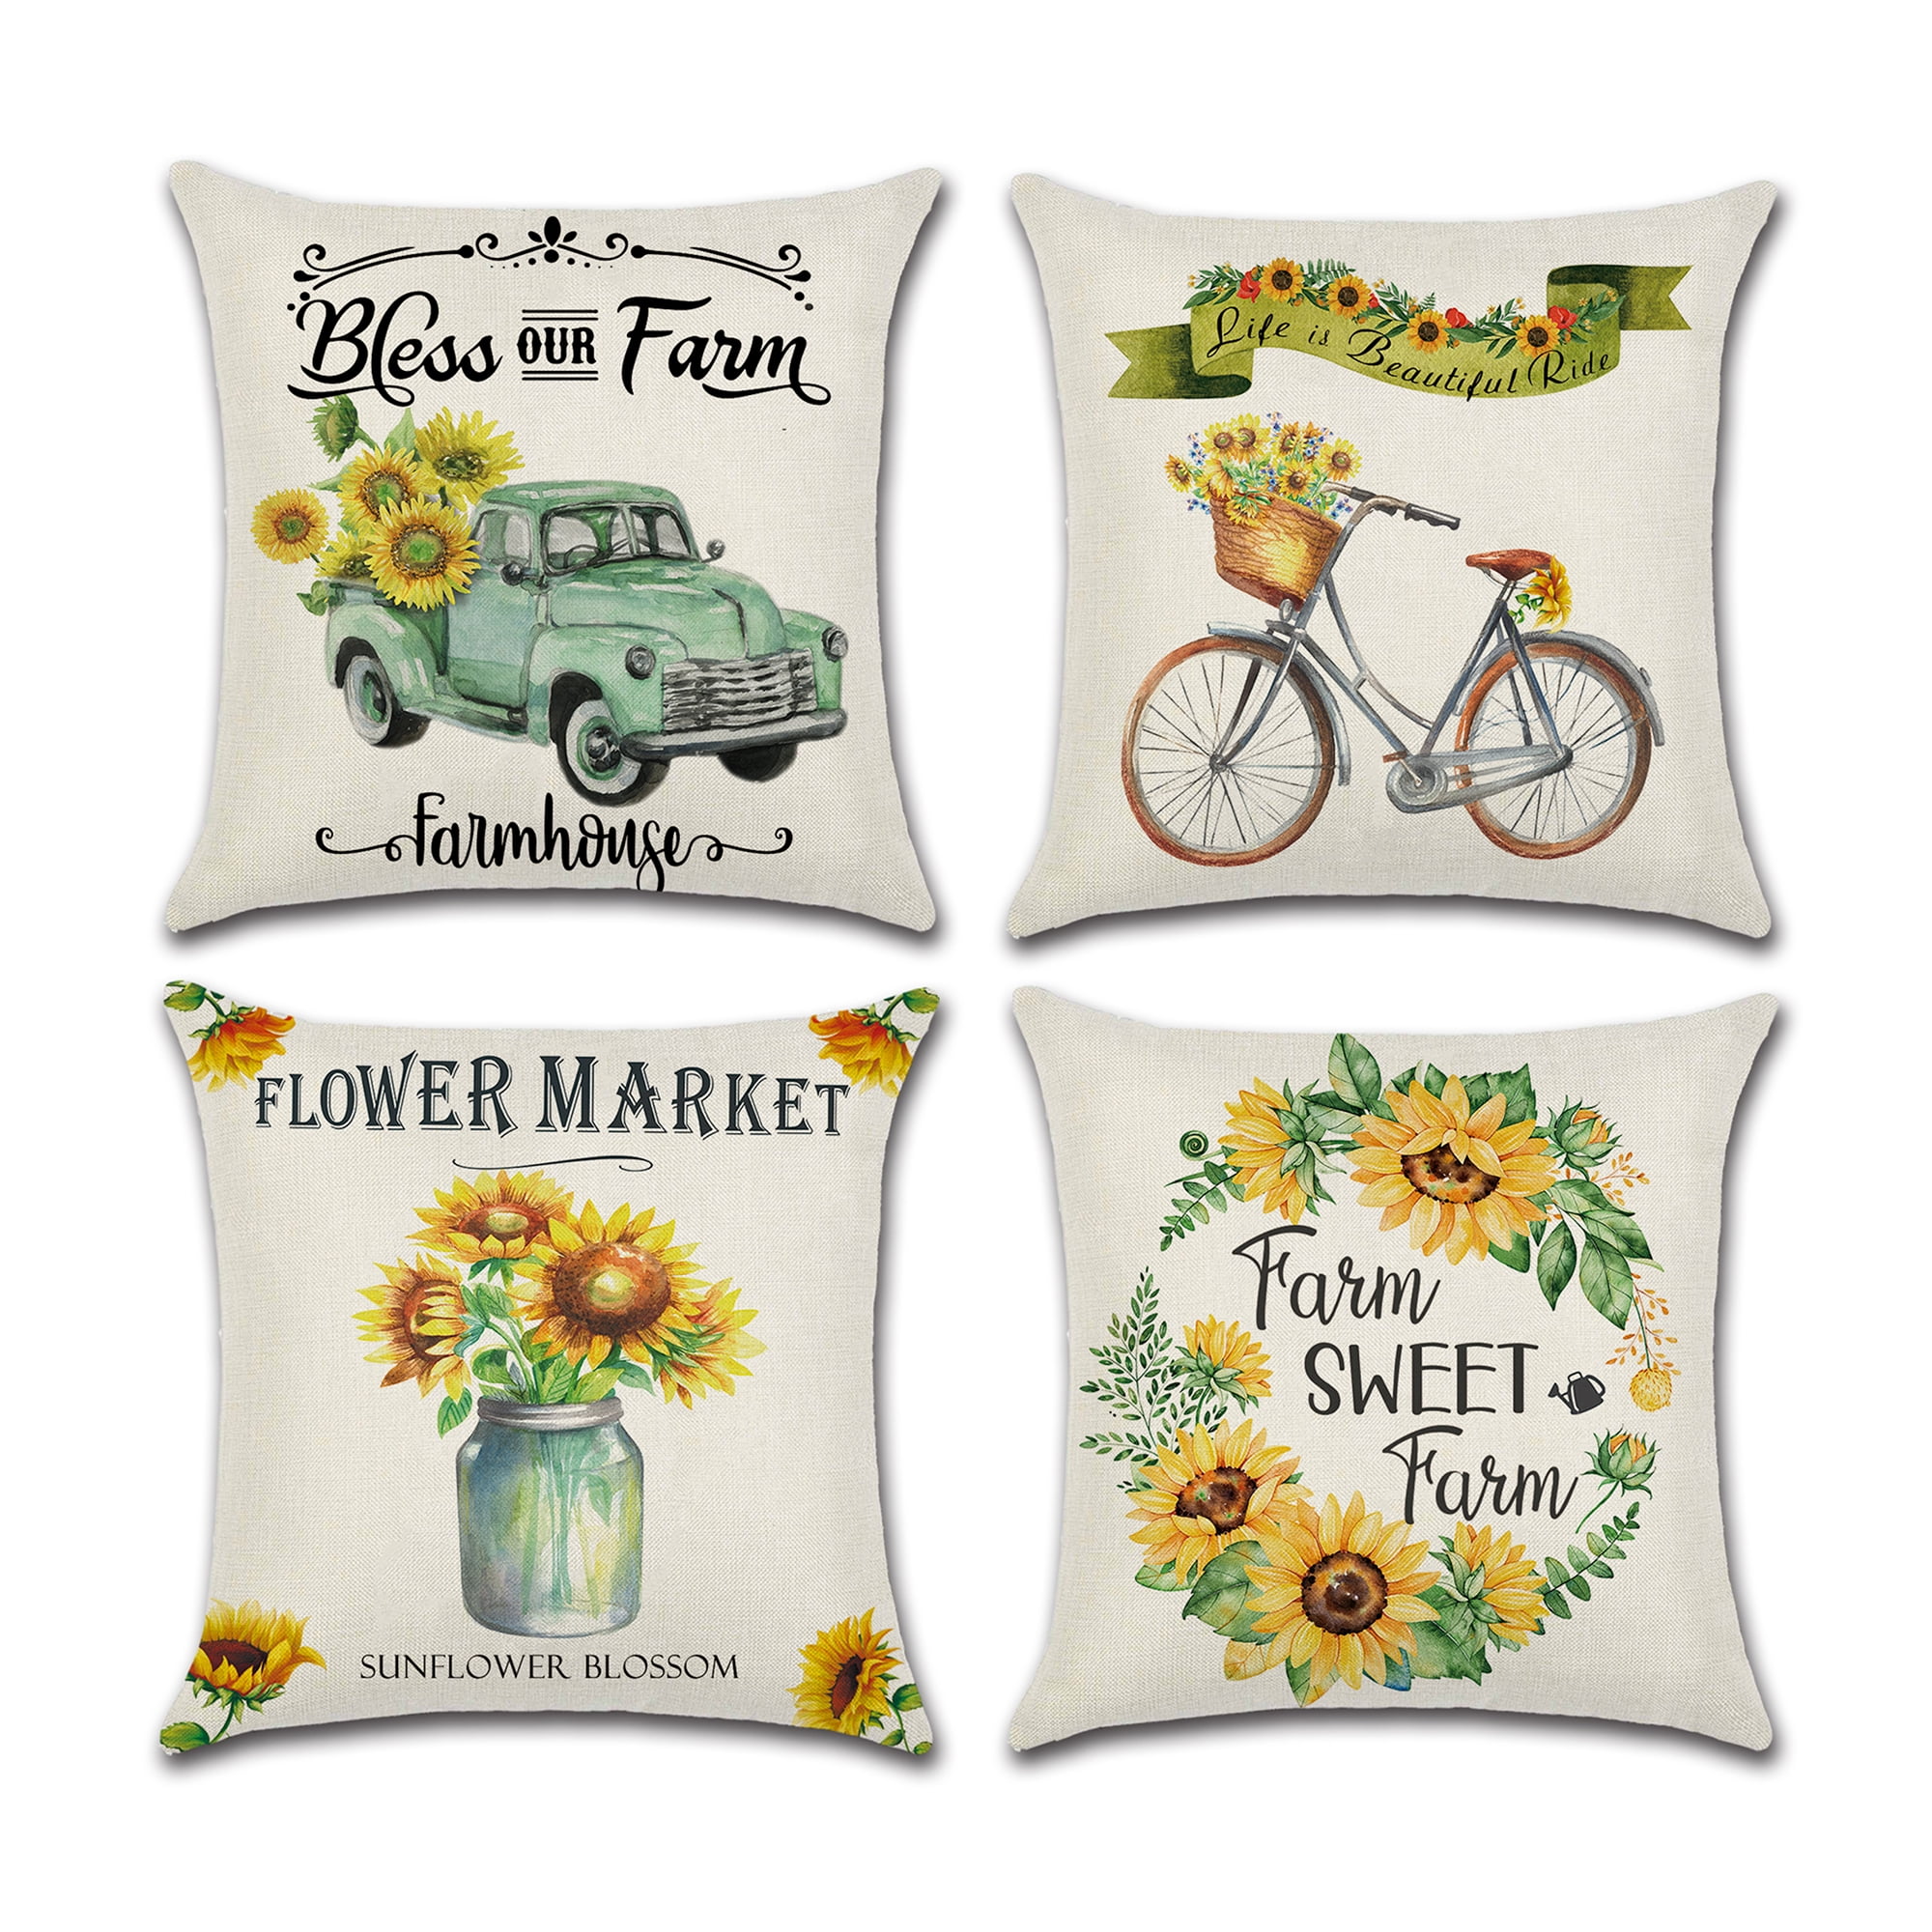 Sunflower Pineapple 15Design Optional Waist Cushion Cover Pillow Case Home Decor 